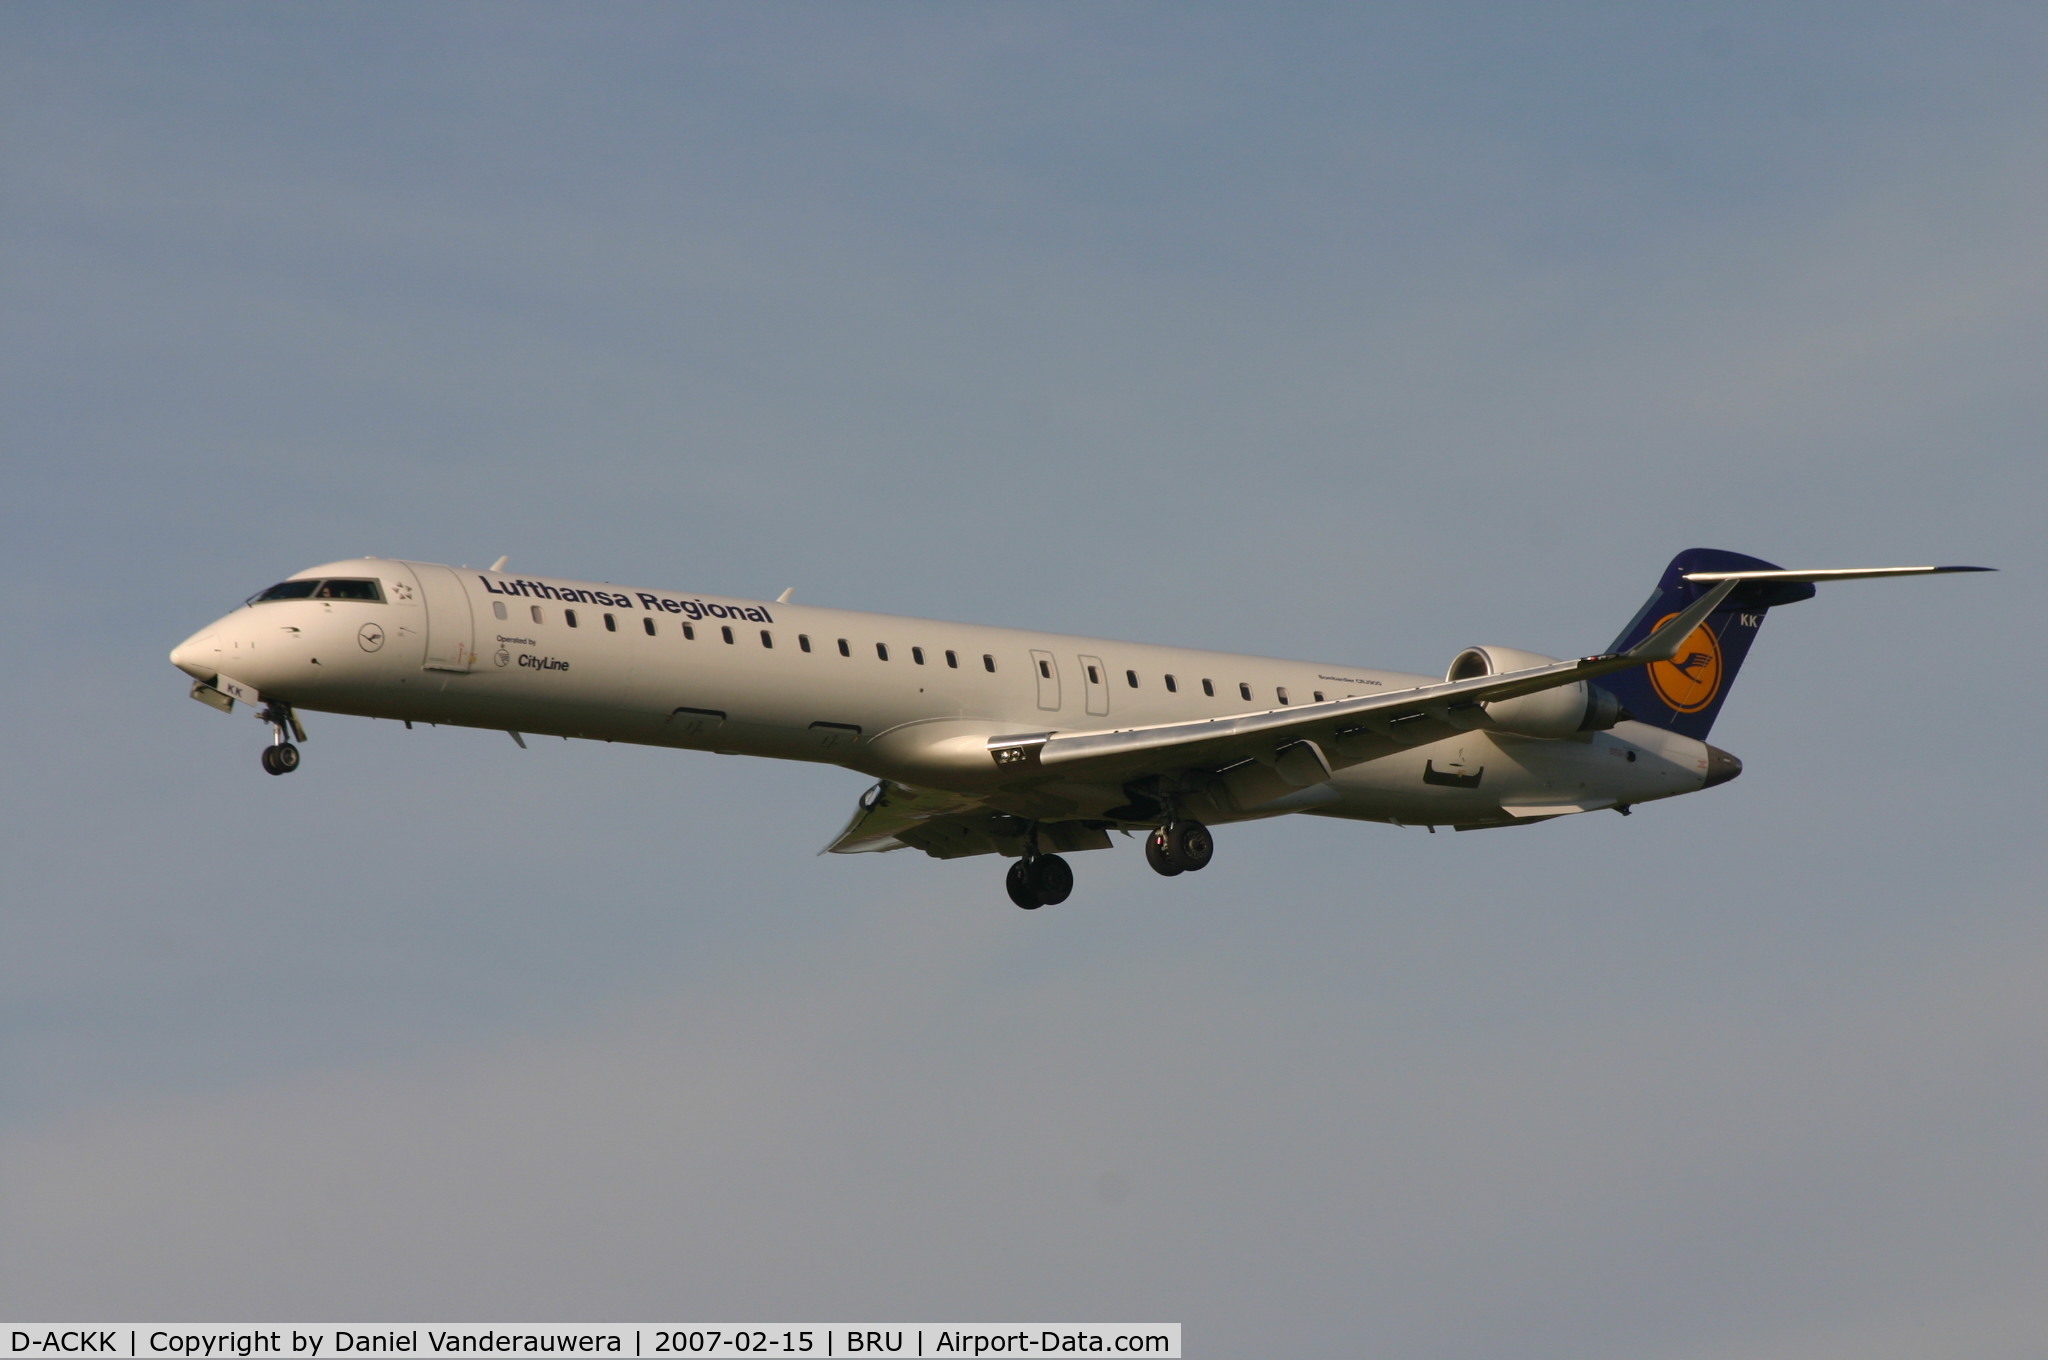 D-ACKK, 2006 Bombardier CRJ-900LR (CL-600-2D24) C/N 15094, arrival of flight LH4608 from MUC